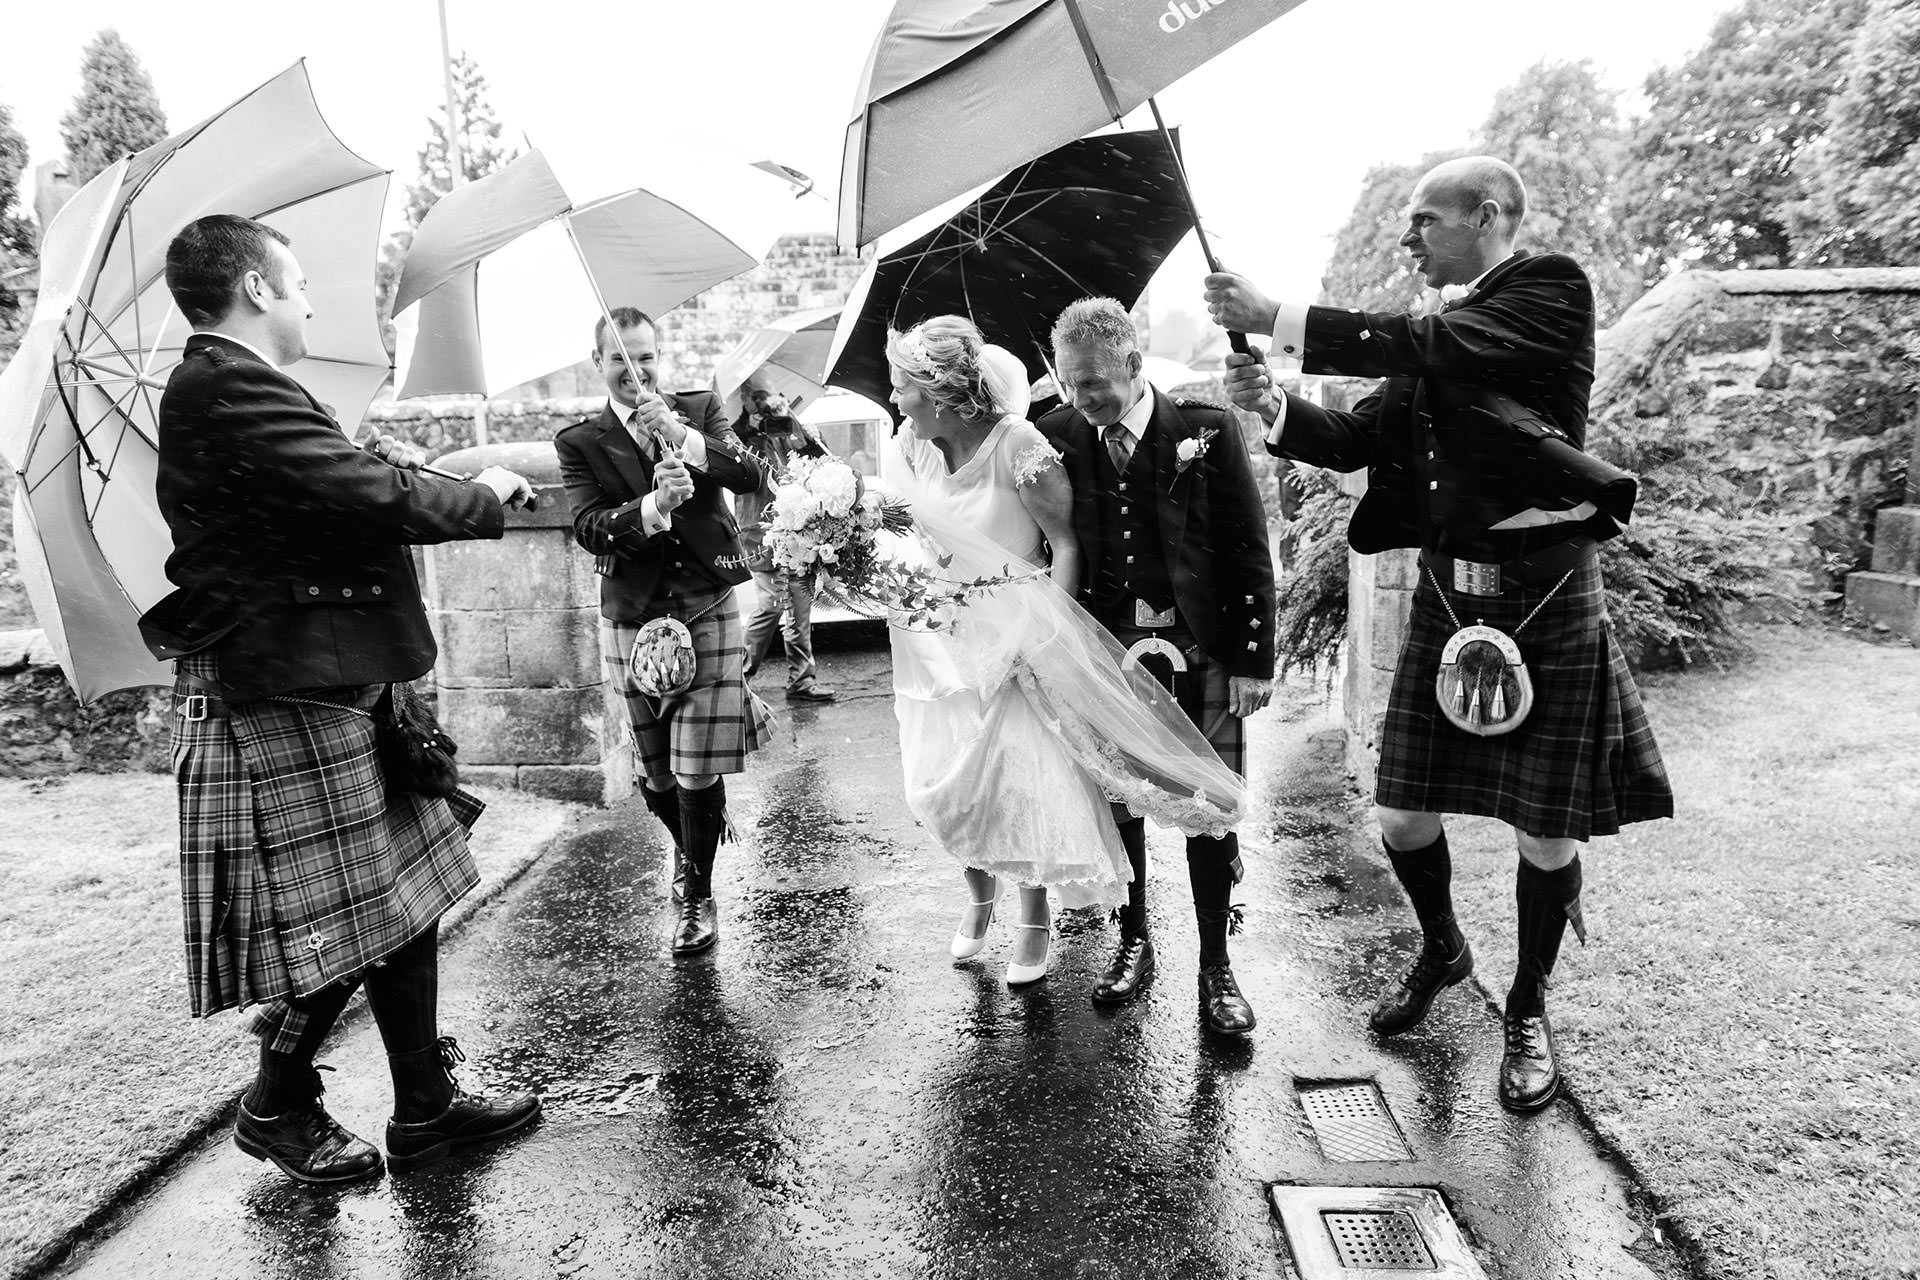 Suzanne Black, Wedding Photographer in Scotland